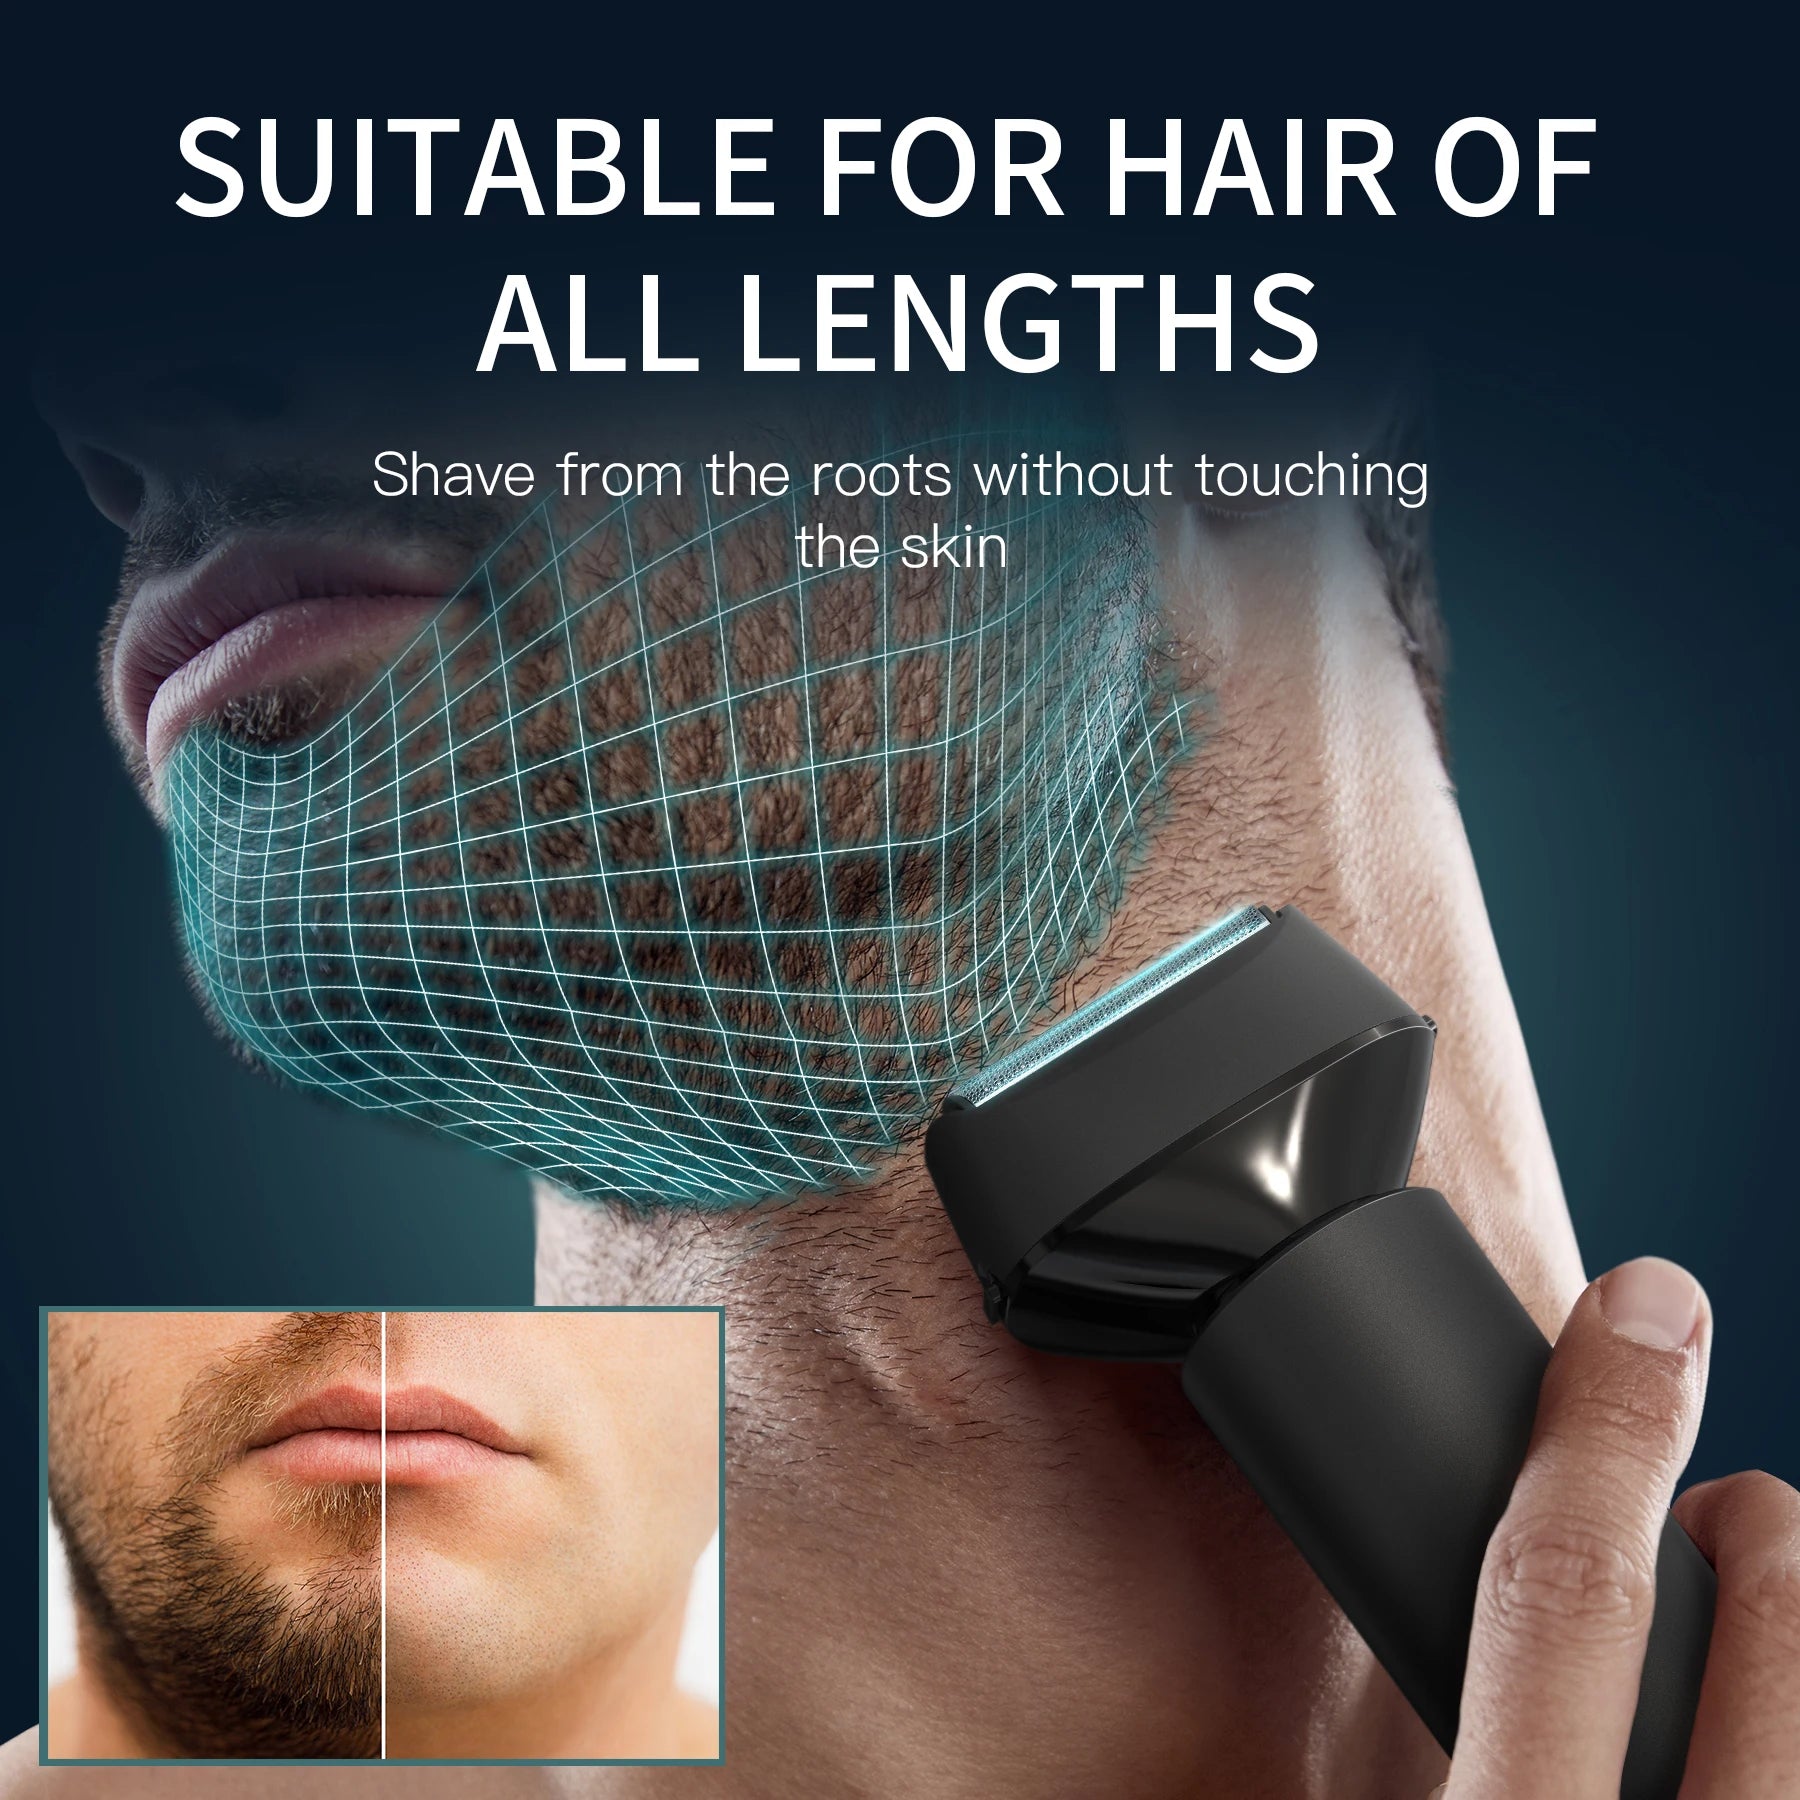 Kensen S15 Electric Shaver for Men Professional Beard Trimmer Razor Shaver Wet/Dry Shaving 3D Floating Blade USB Rechargeable